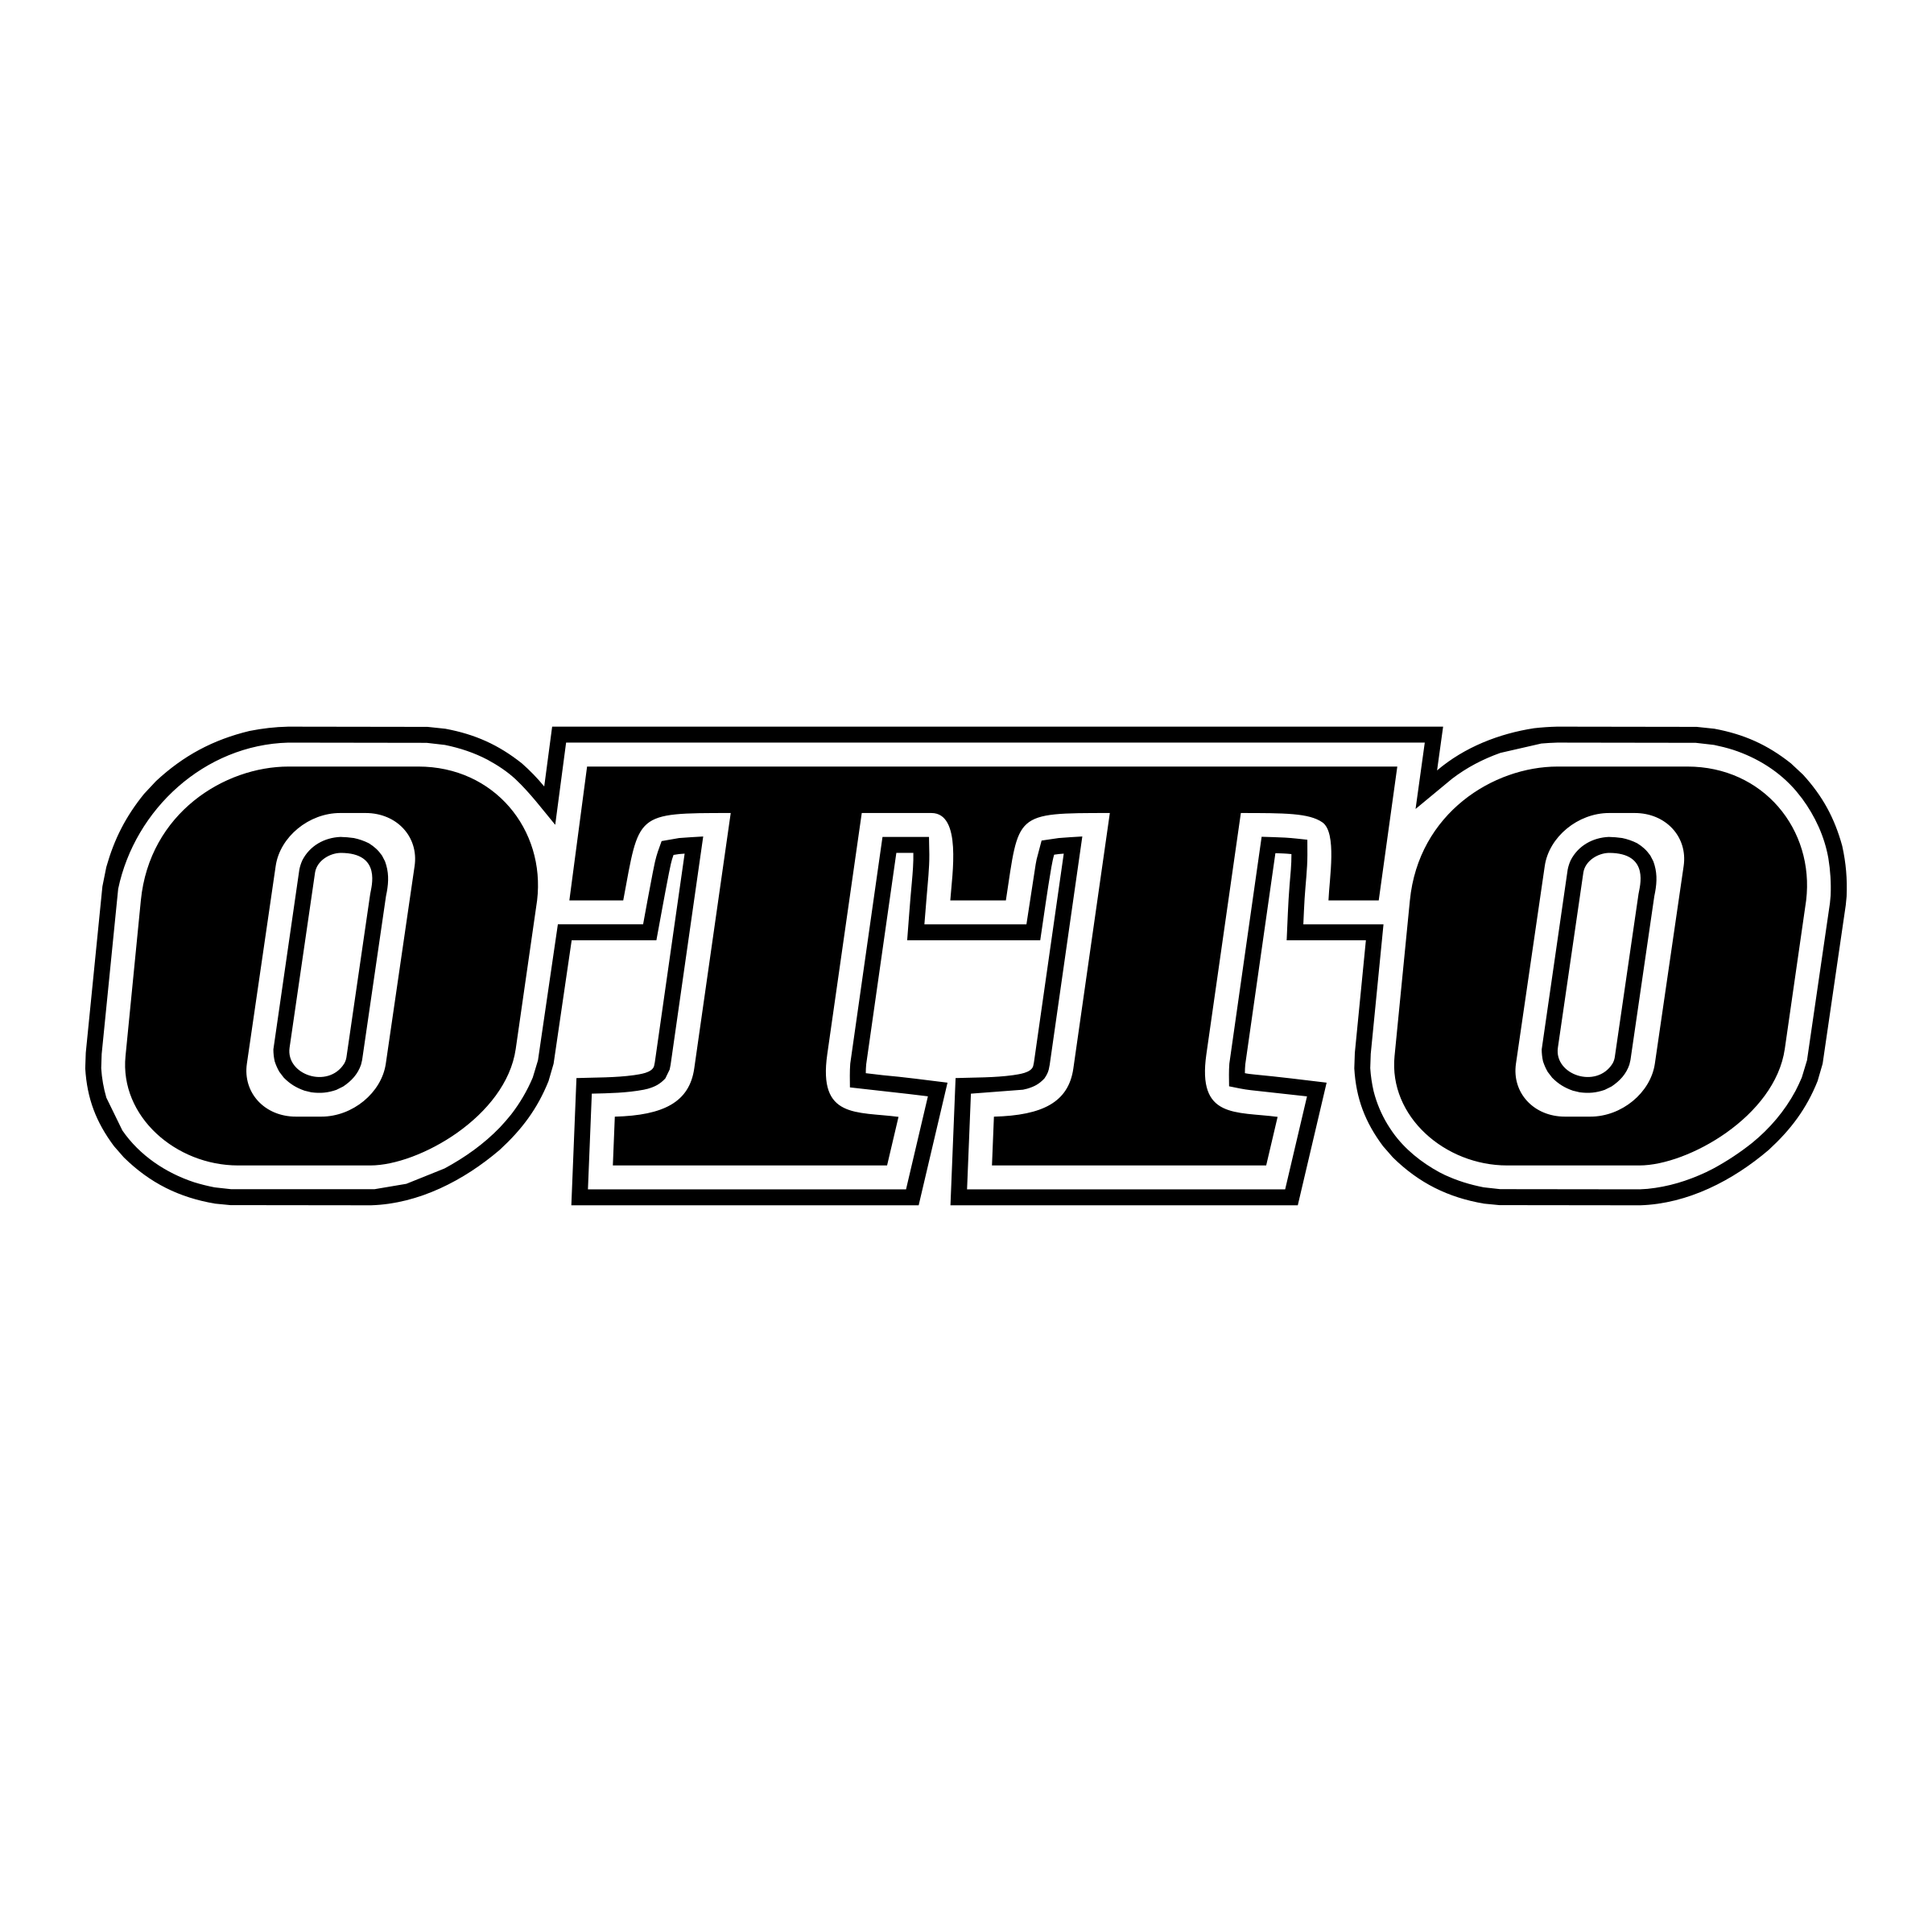 Otto Logo - Otto Logo PNG Transparent & SVG Vector - Freebie Supply